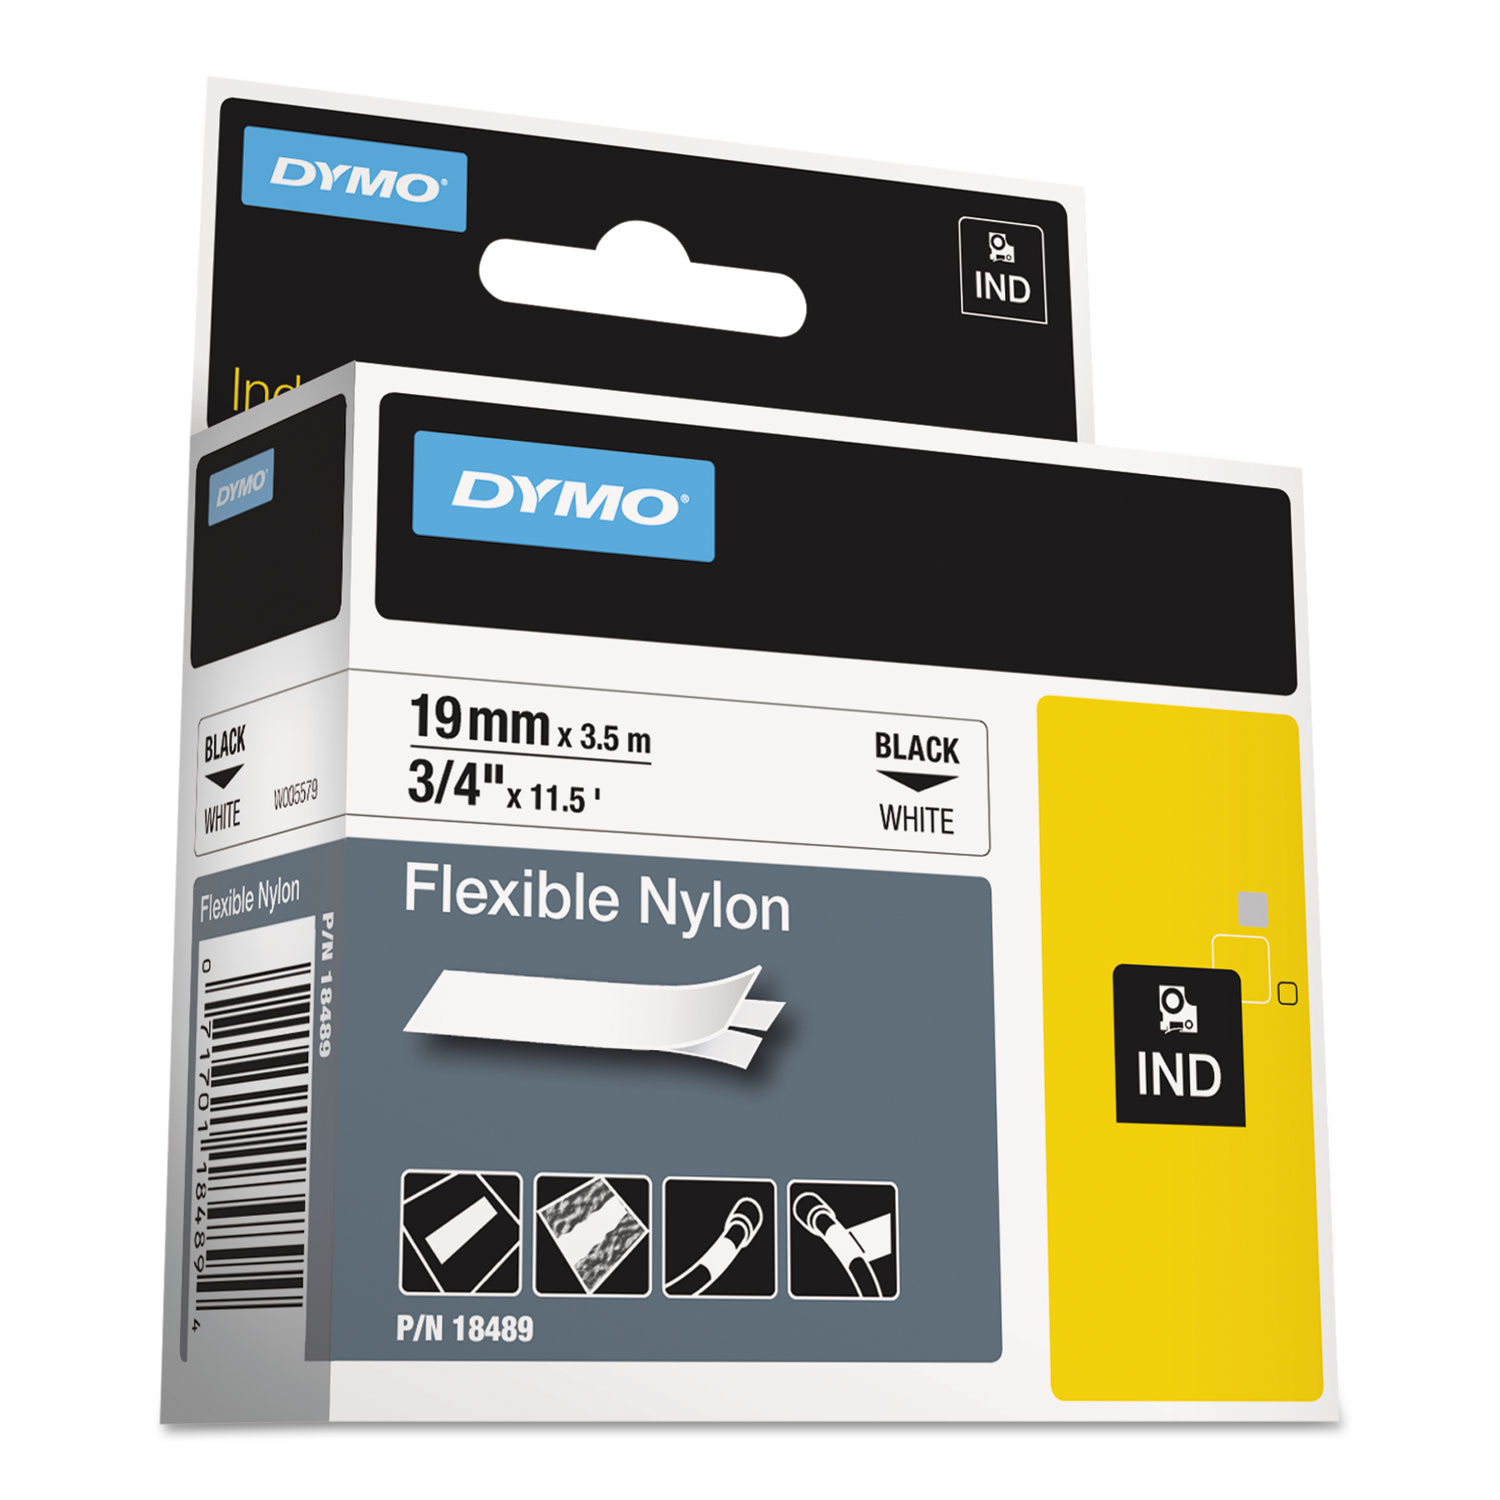 DYMO DYM18489 Rhino Flexible Nylon Industrial Label Tape, 3/4" x 11 1/2 ft, White/Black Print